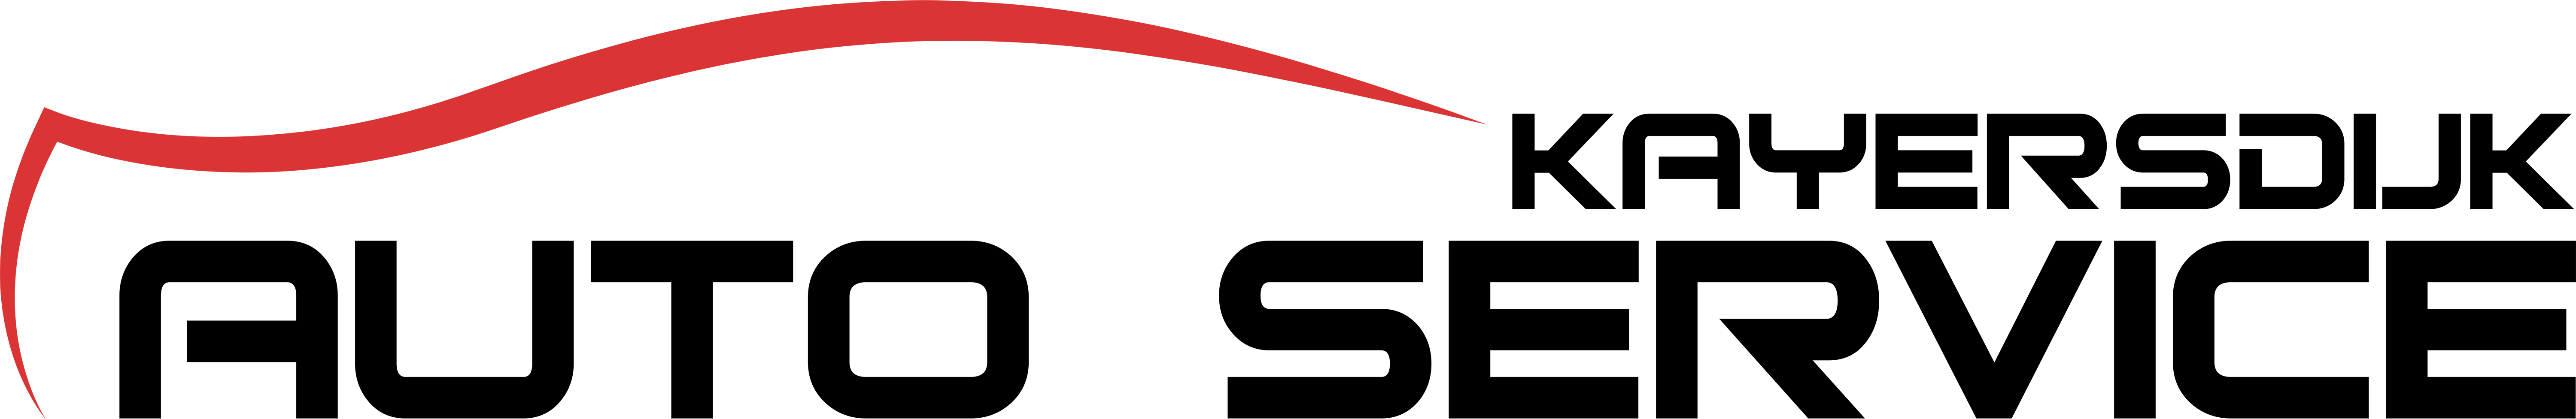 Auto Service Kayersdijk Logo